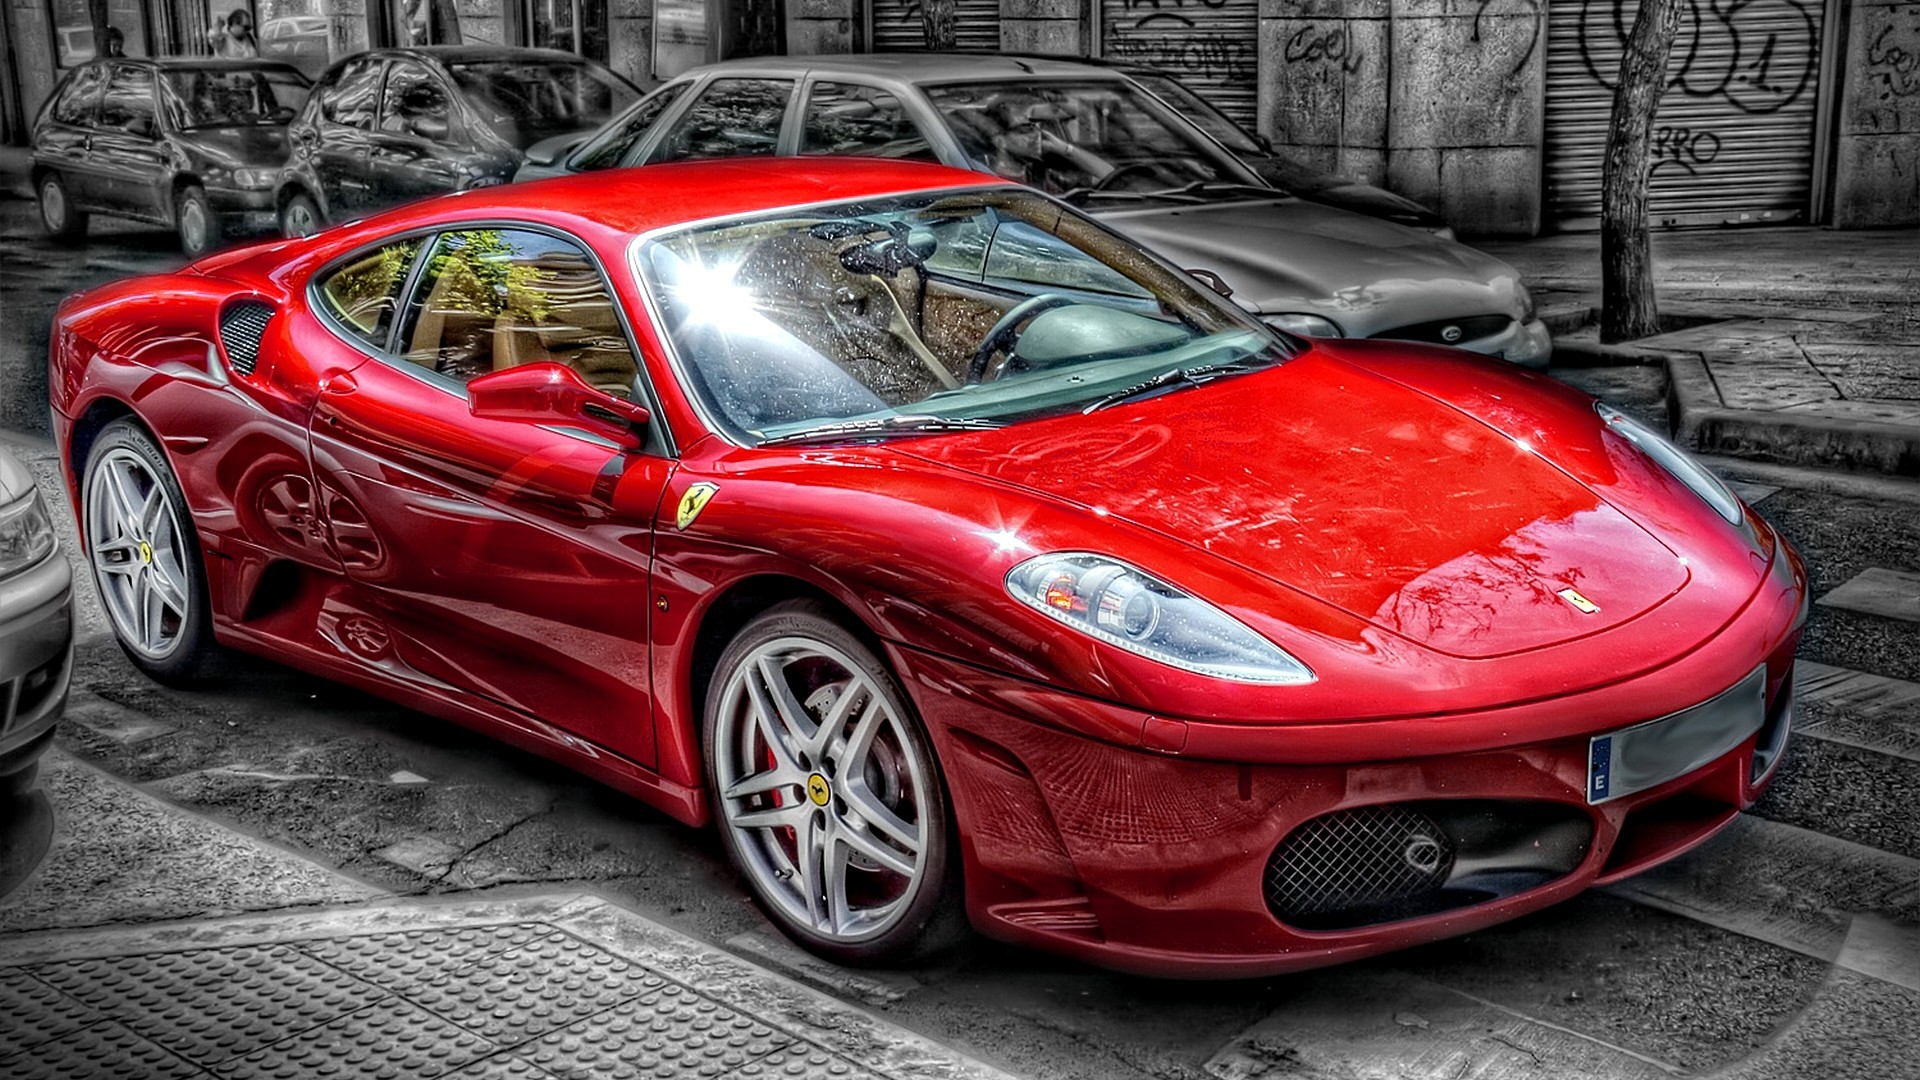 General 1920x1080 Ferrari F430 Ferrari car vehicle selective coloring red cars italian cars Stellantis HDR